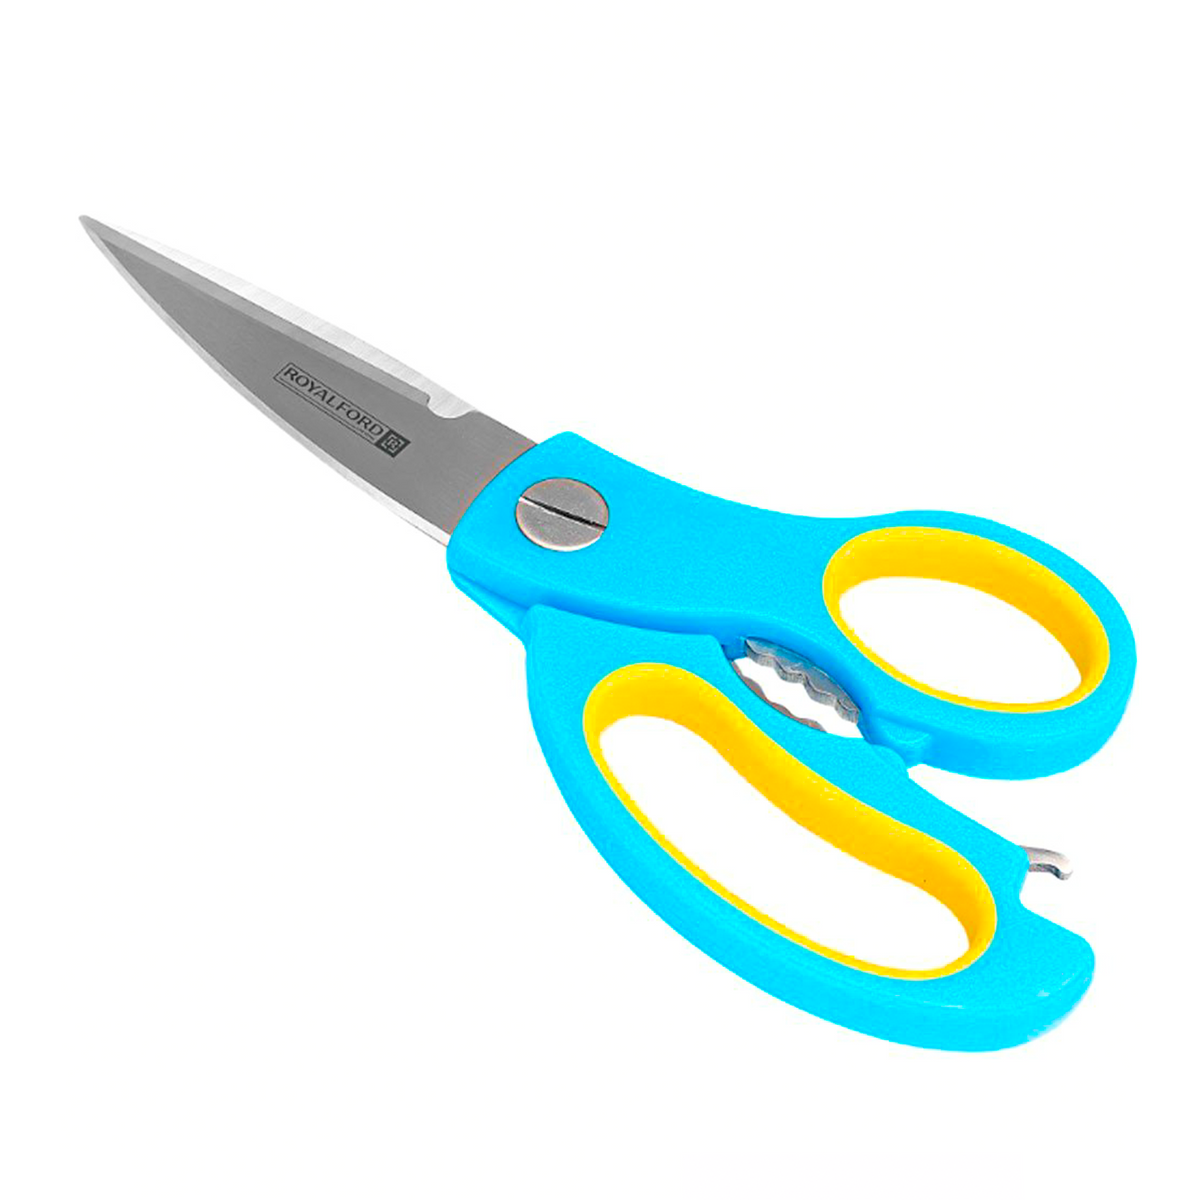 Rf2190-S Kitchen Scissors 3 In One